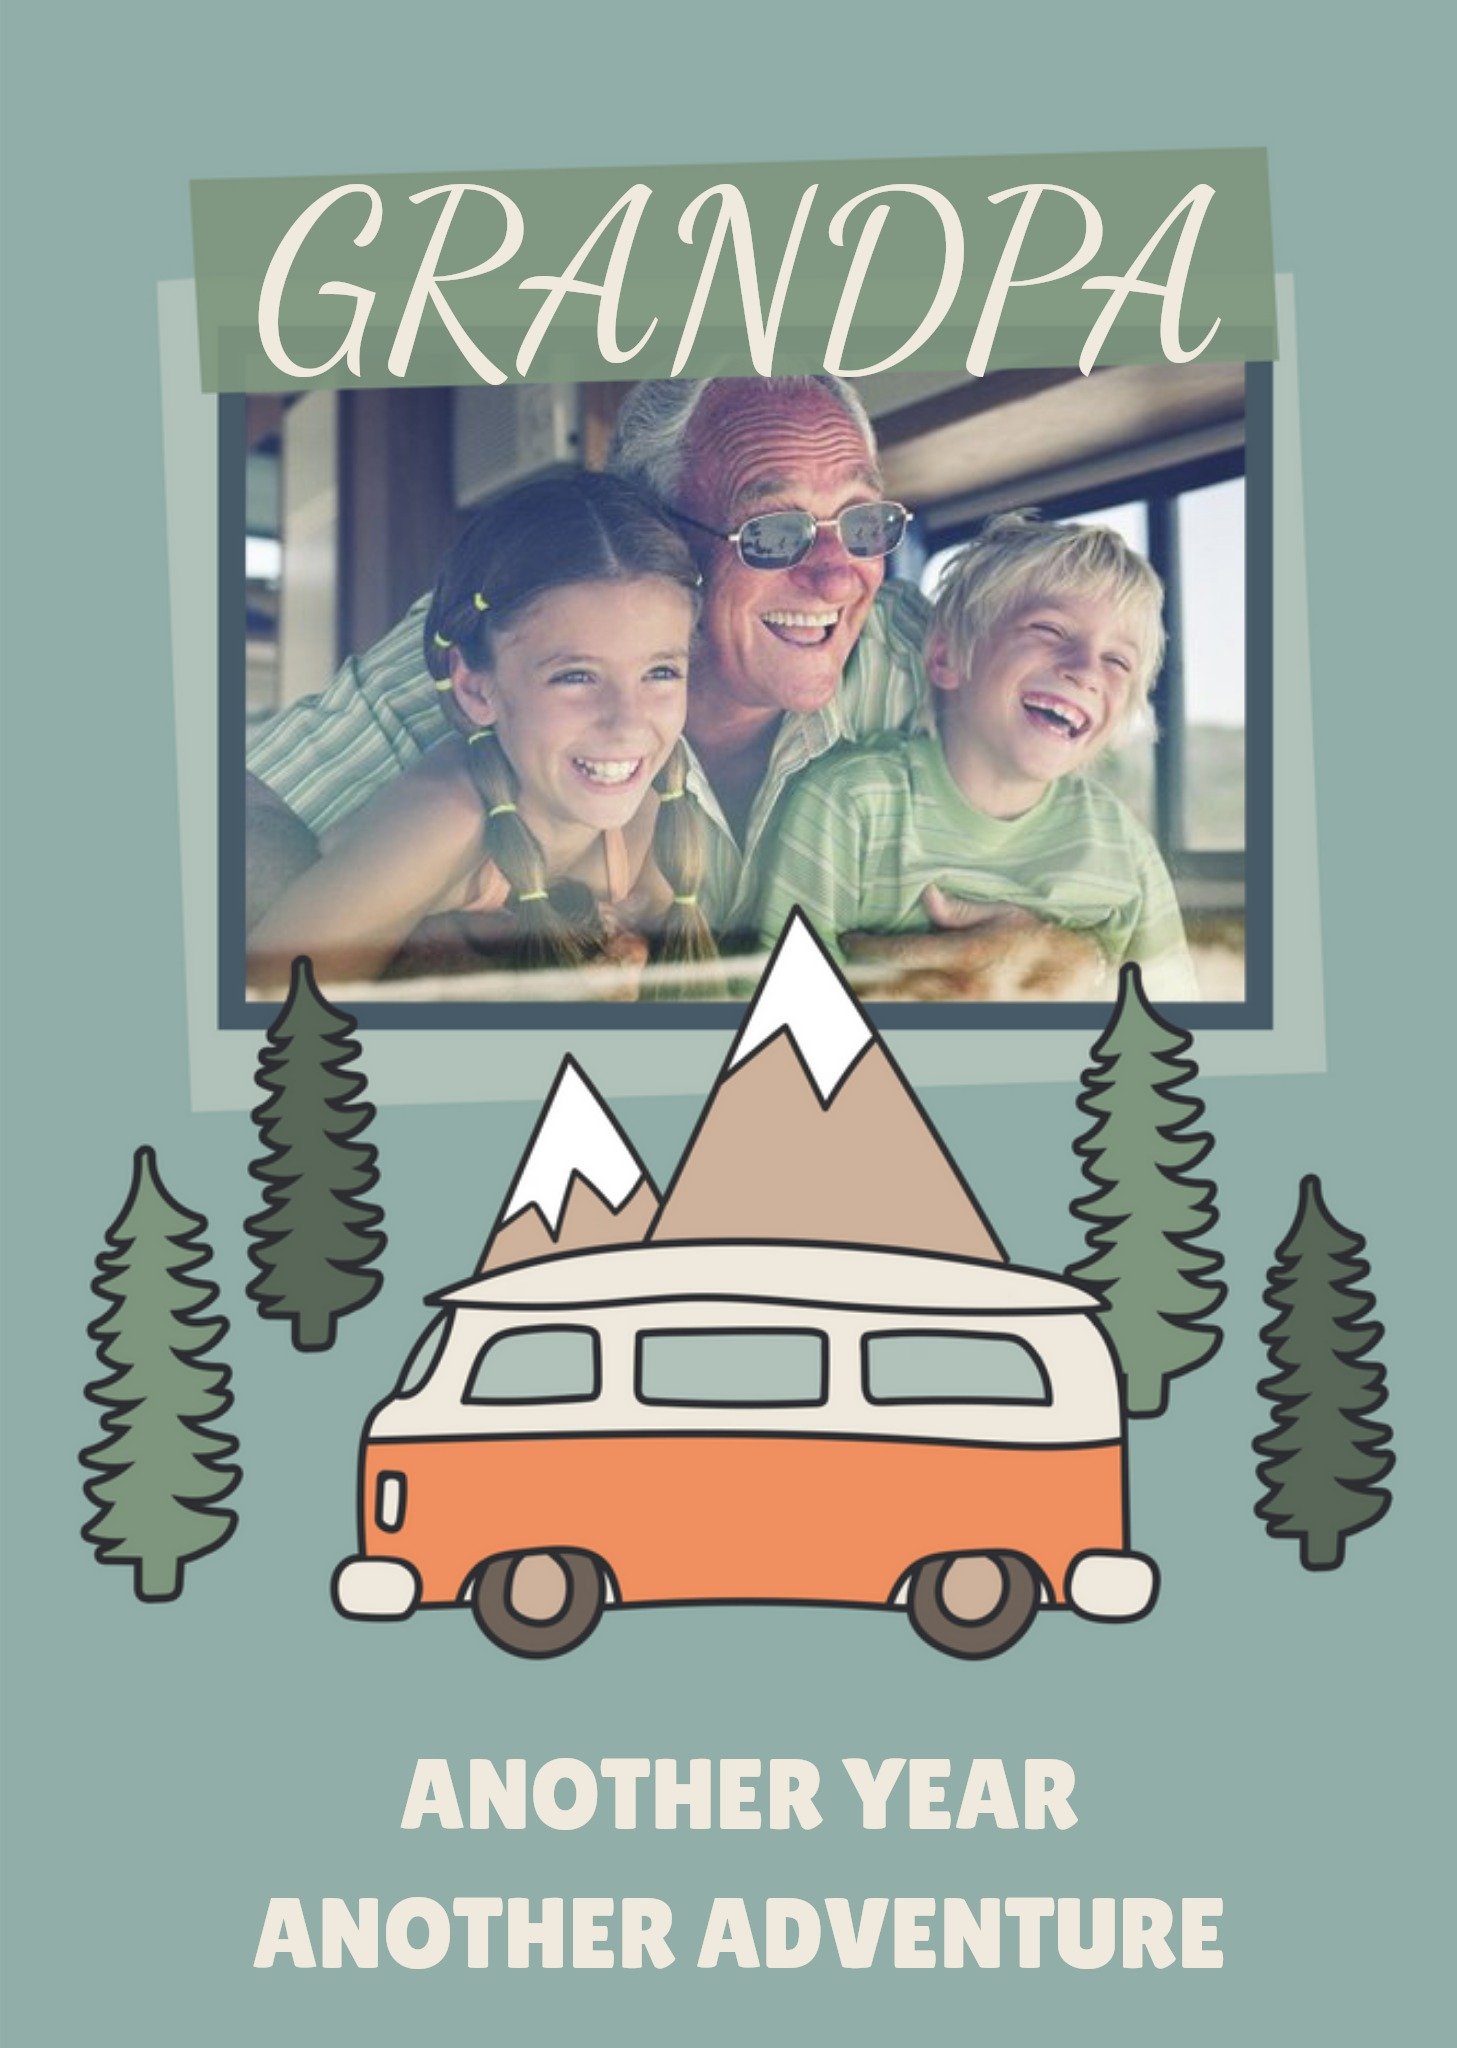 Moonpig Outdoor Adventure Camper Van Photo Upload Birthday Grandpa Card Ecard